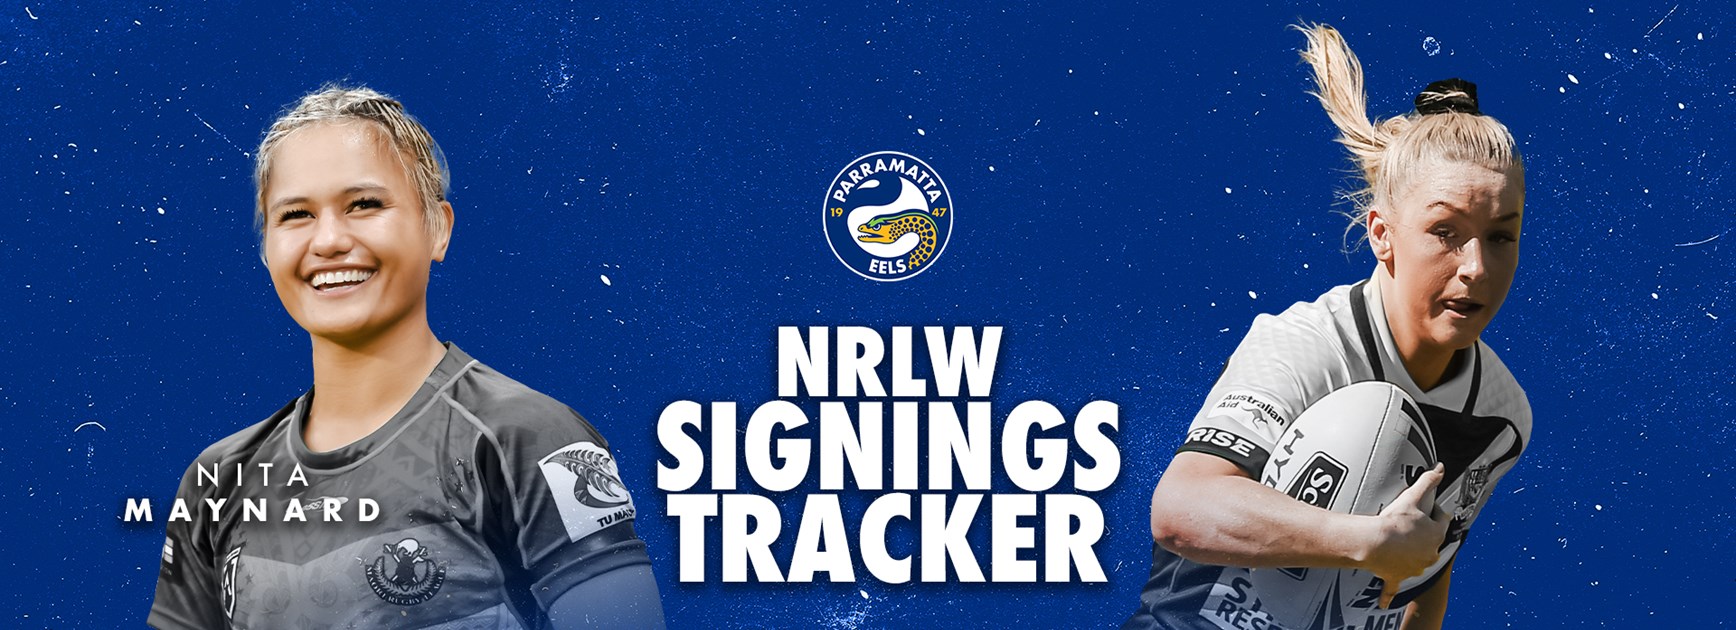 Eels' NRLW Signings Tracker